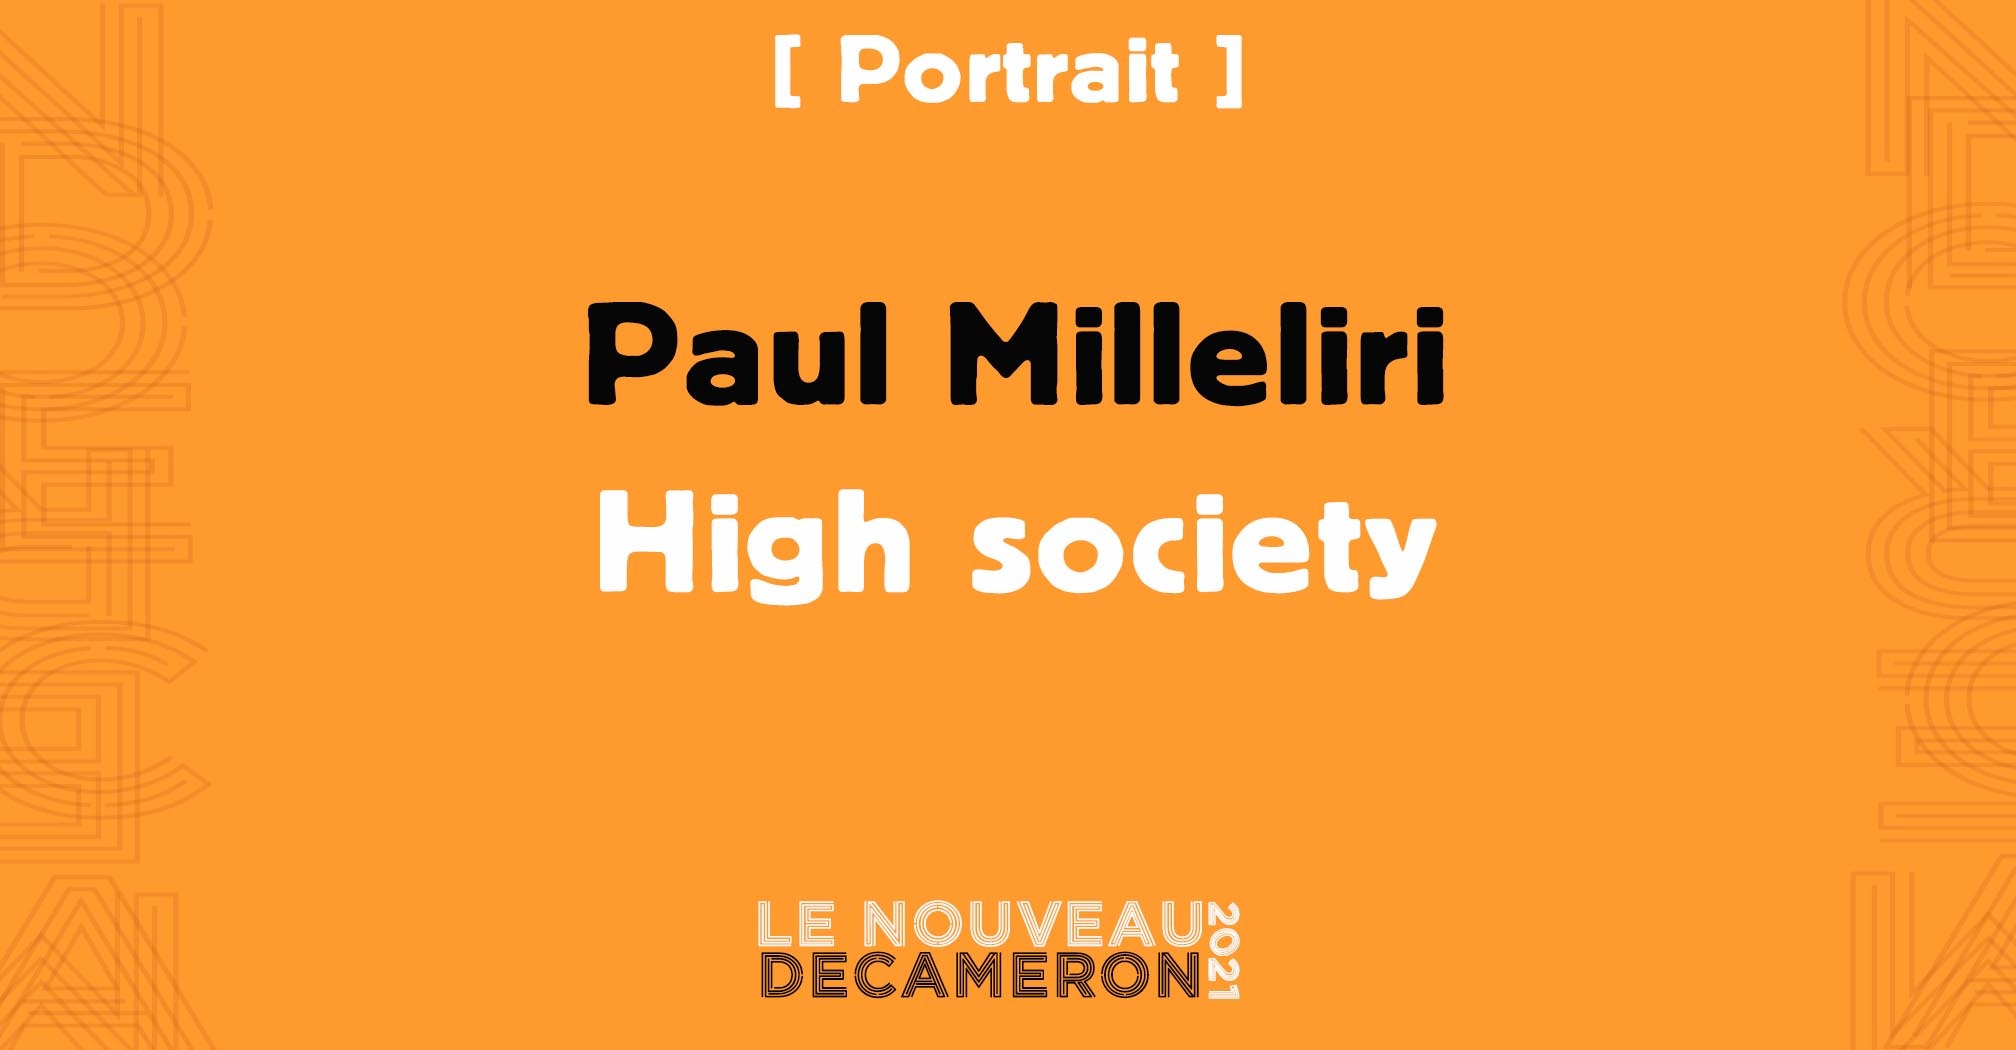 Paul Milleliri - High society